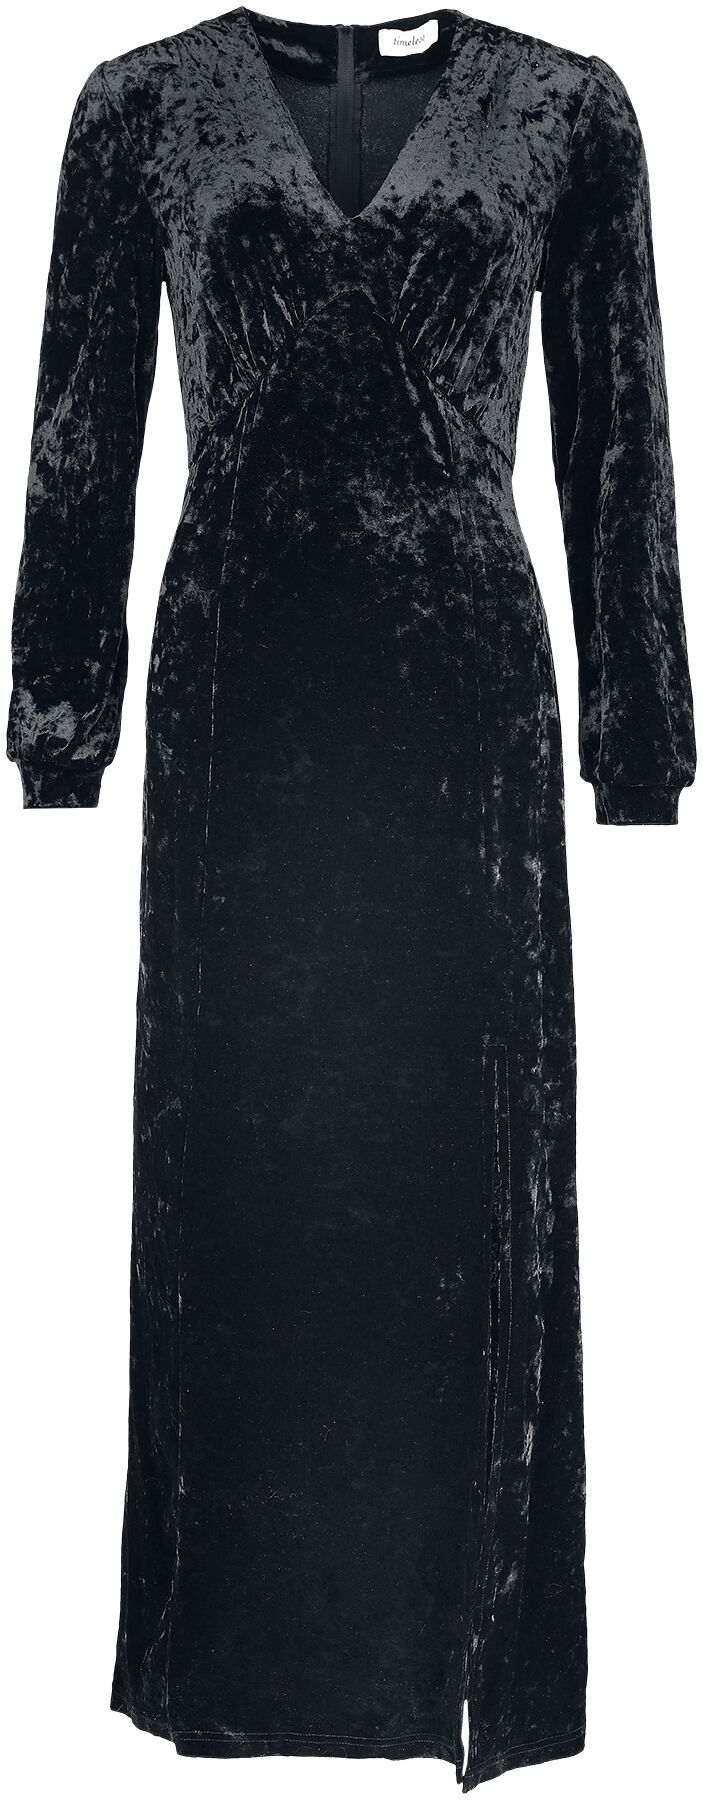 Timeless London - Rockabilly Kleid lang - Miley Black Dress - XS bis L - für Damen - Größe L - schwarz